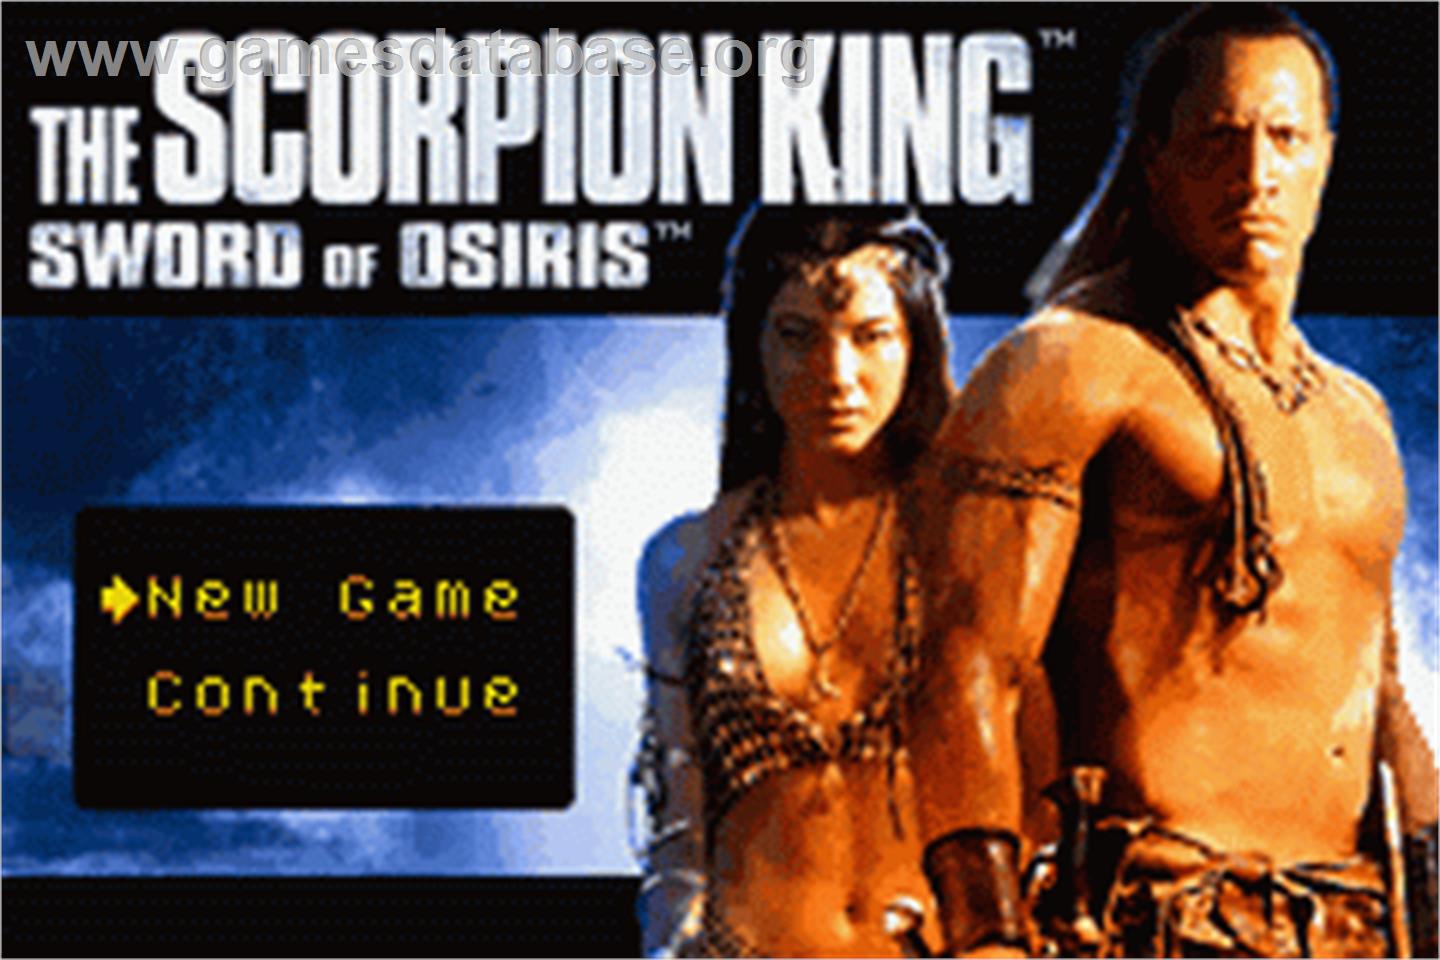 Scorpion King: Sword of Osiris - Nintendo Game Boy Advance - Artwork - Title Screen